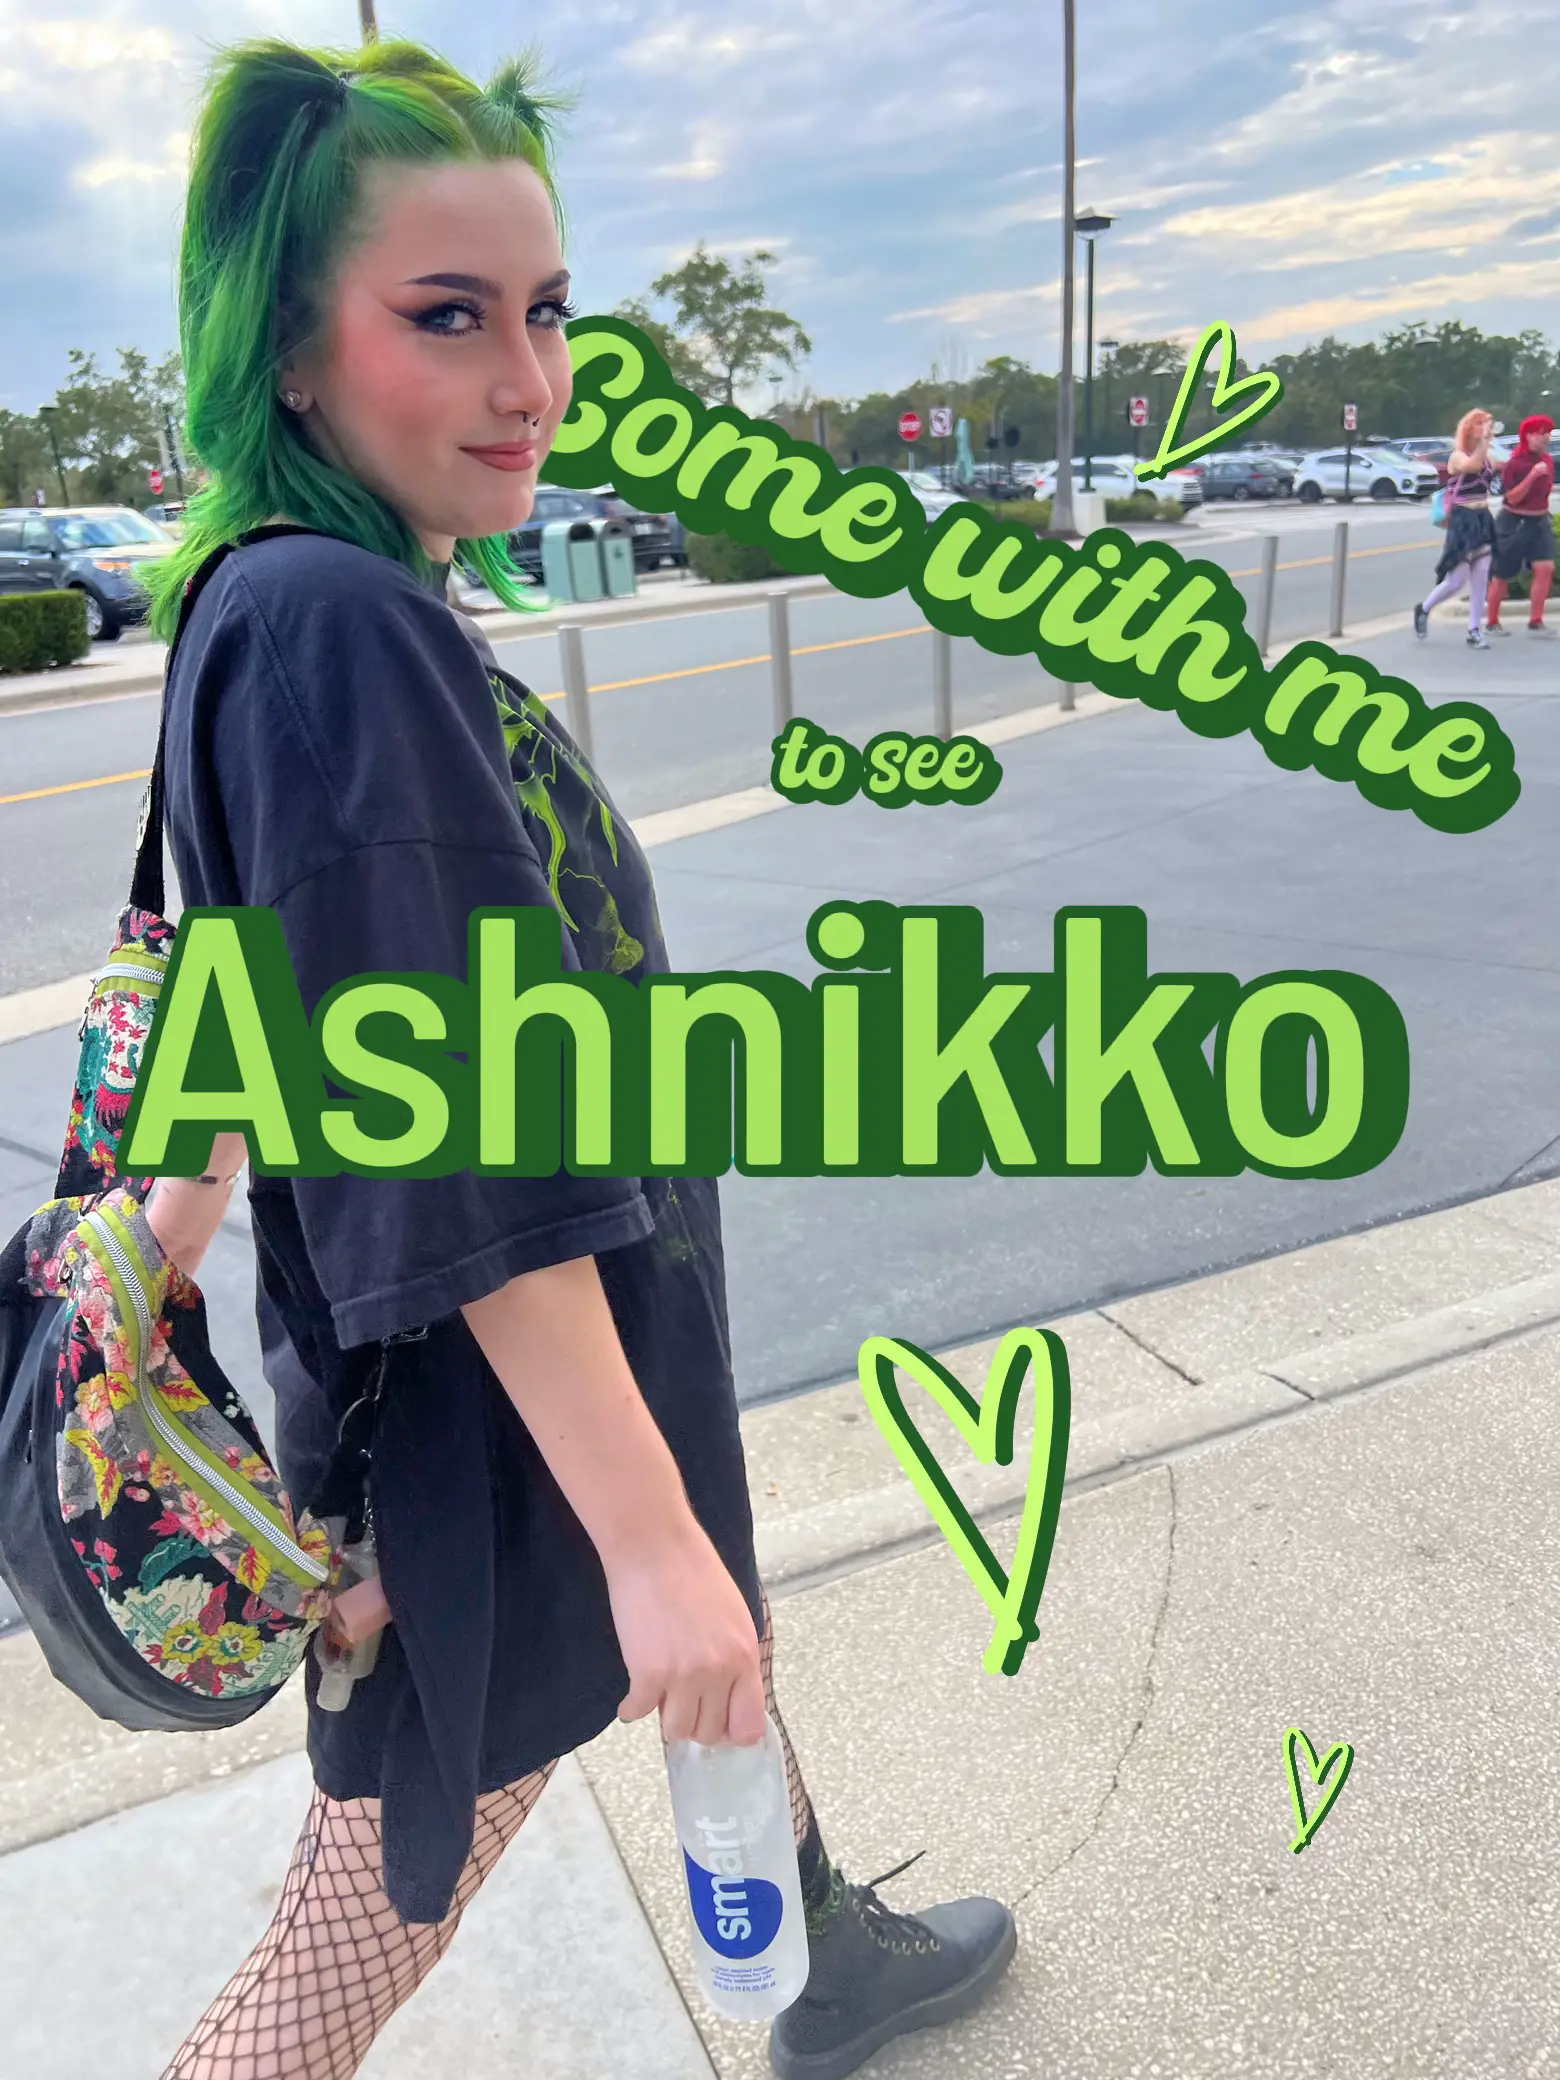 “WHO’S ASHNIKKO?”'s images